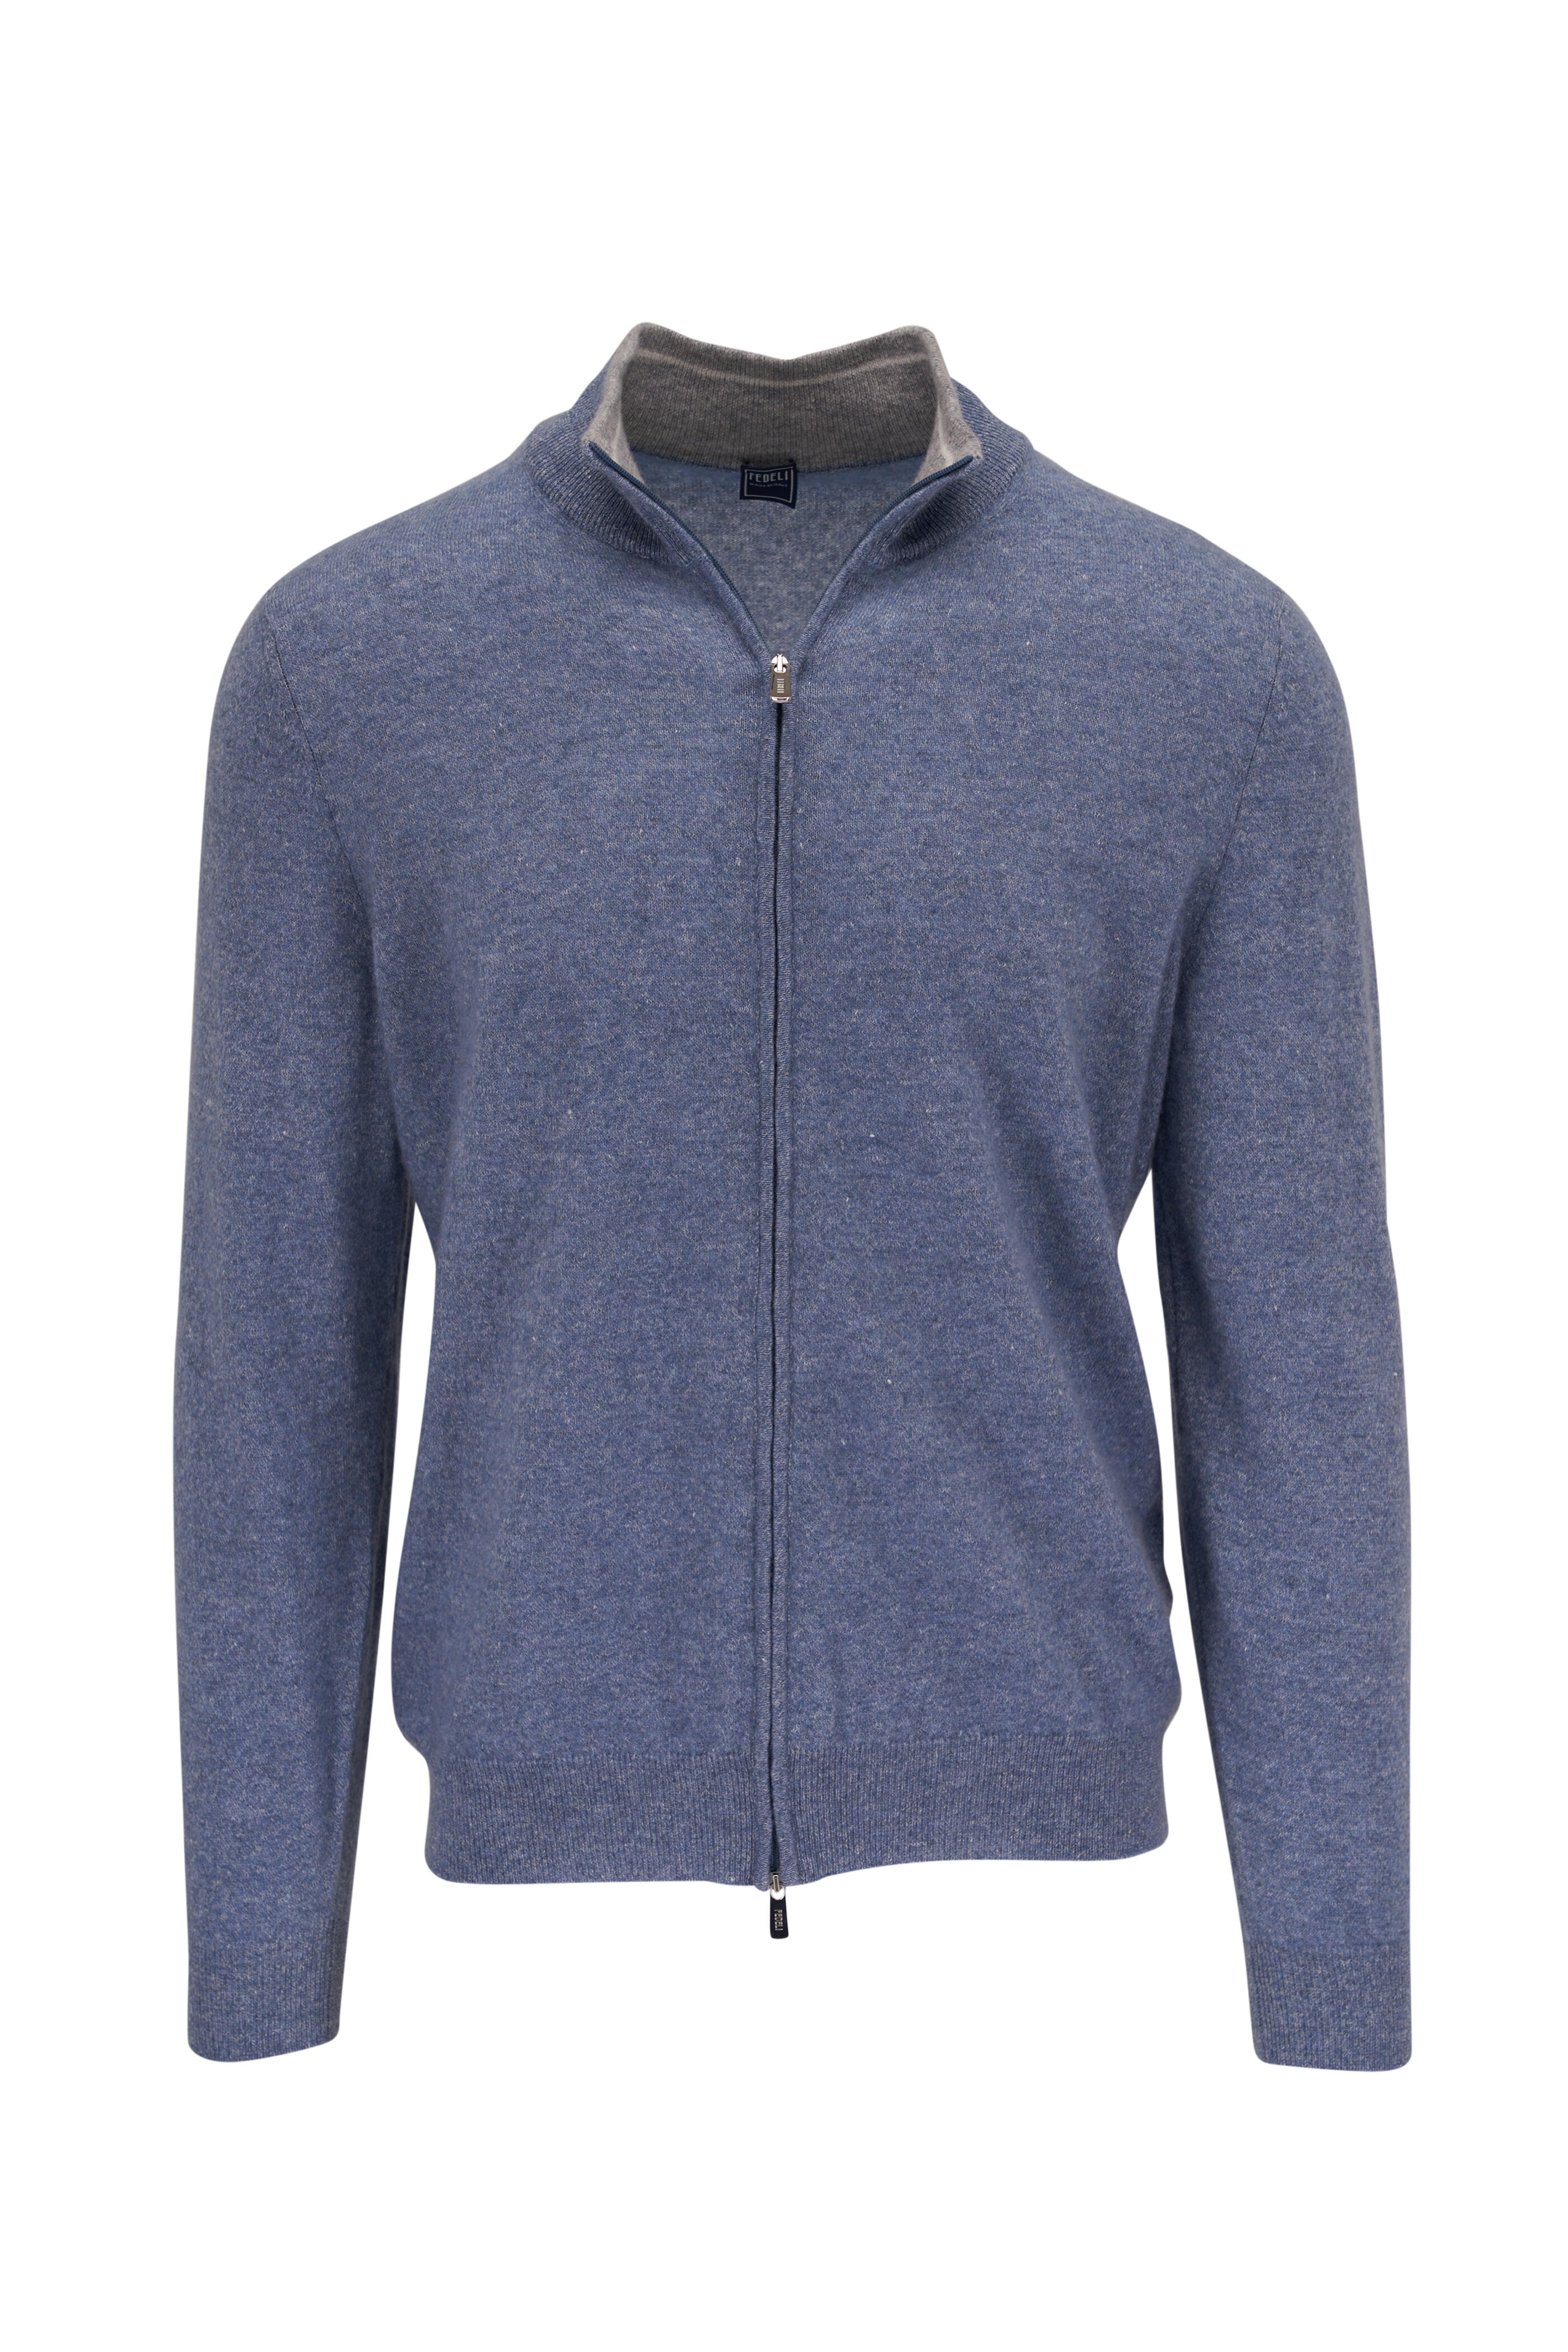 Fedeli - Denim Blue Cashmere & Linen Full Zip Sweater